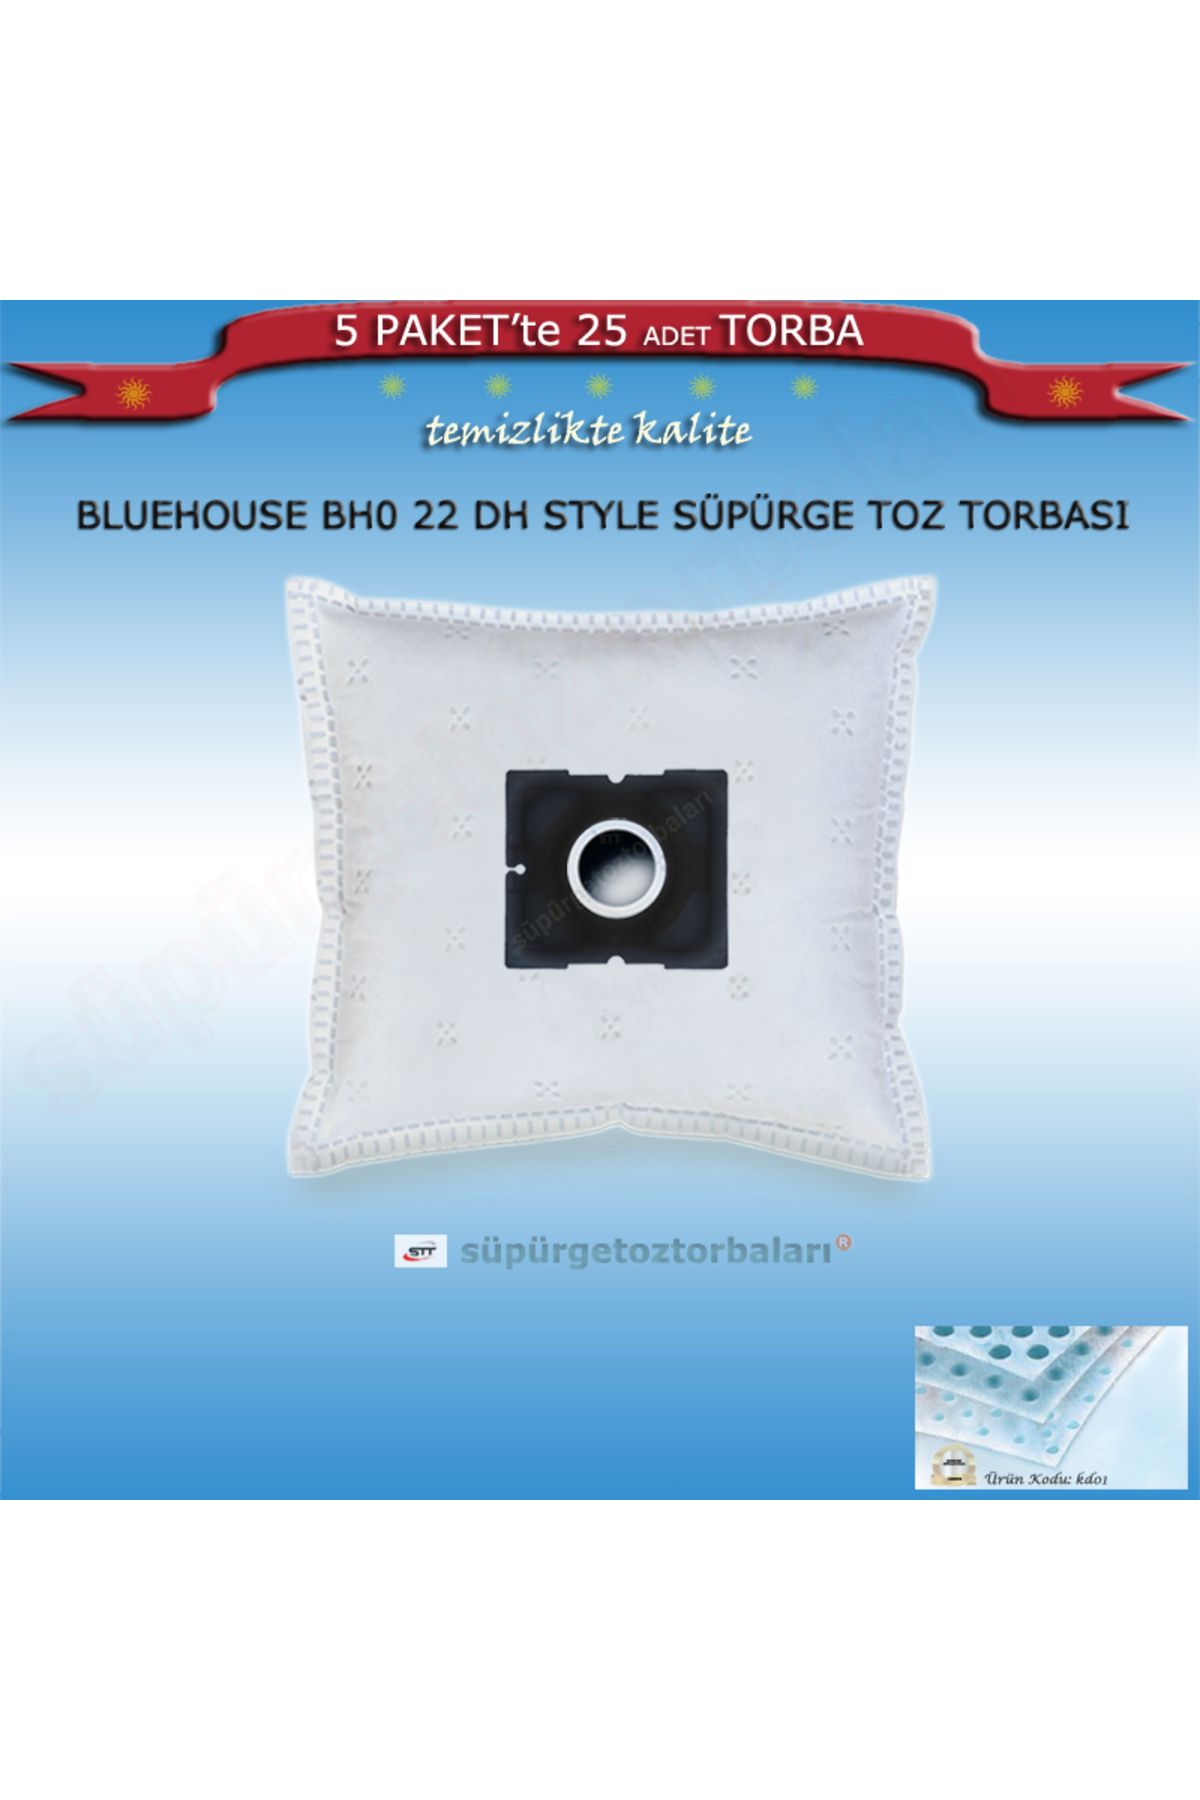 BLUE HOUSE Bluehouse Bh0 22 Dh Style Süpürge Toz Torbası 25 Adet Torba Kd01